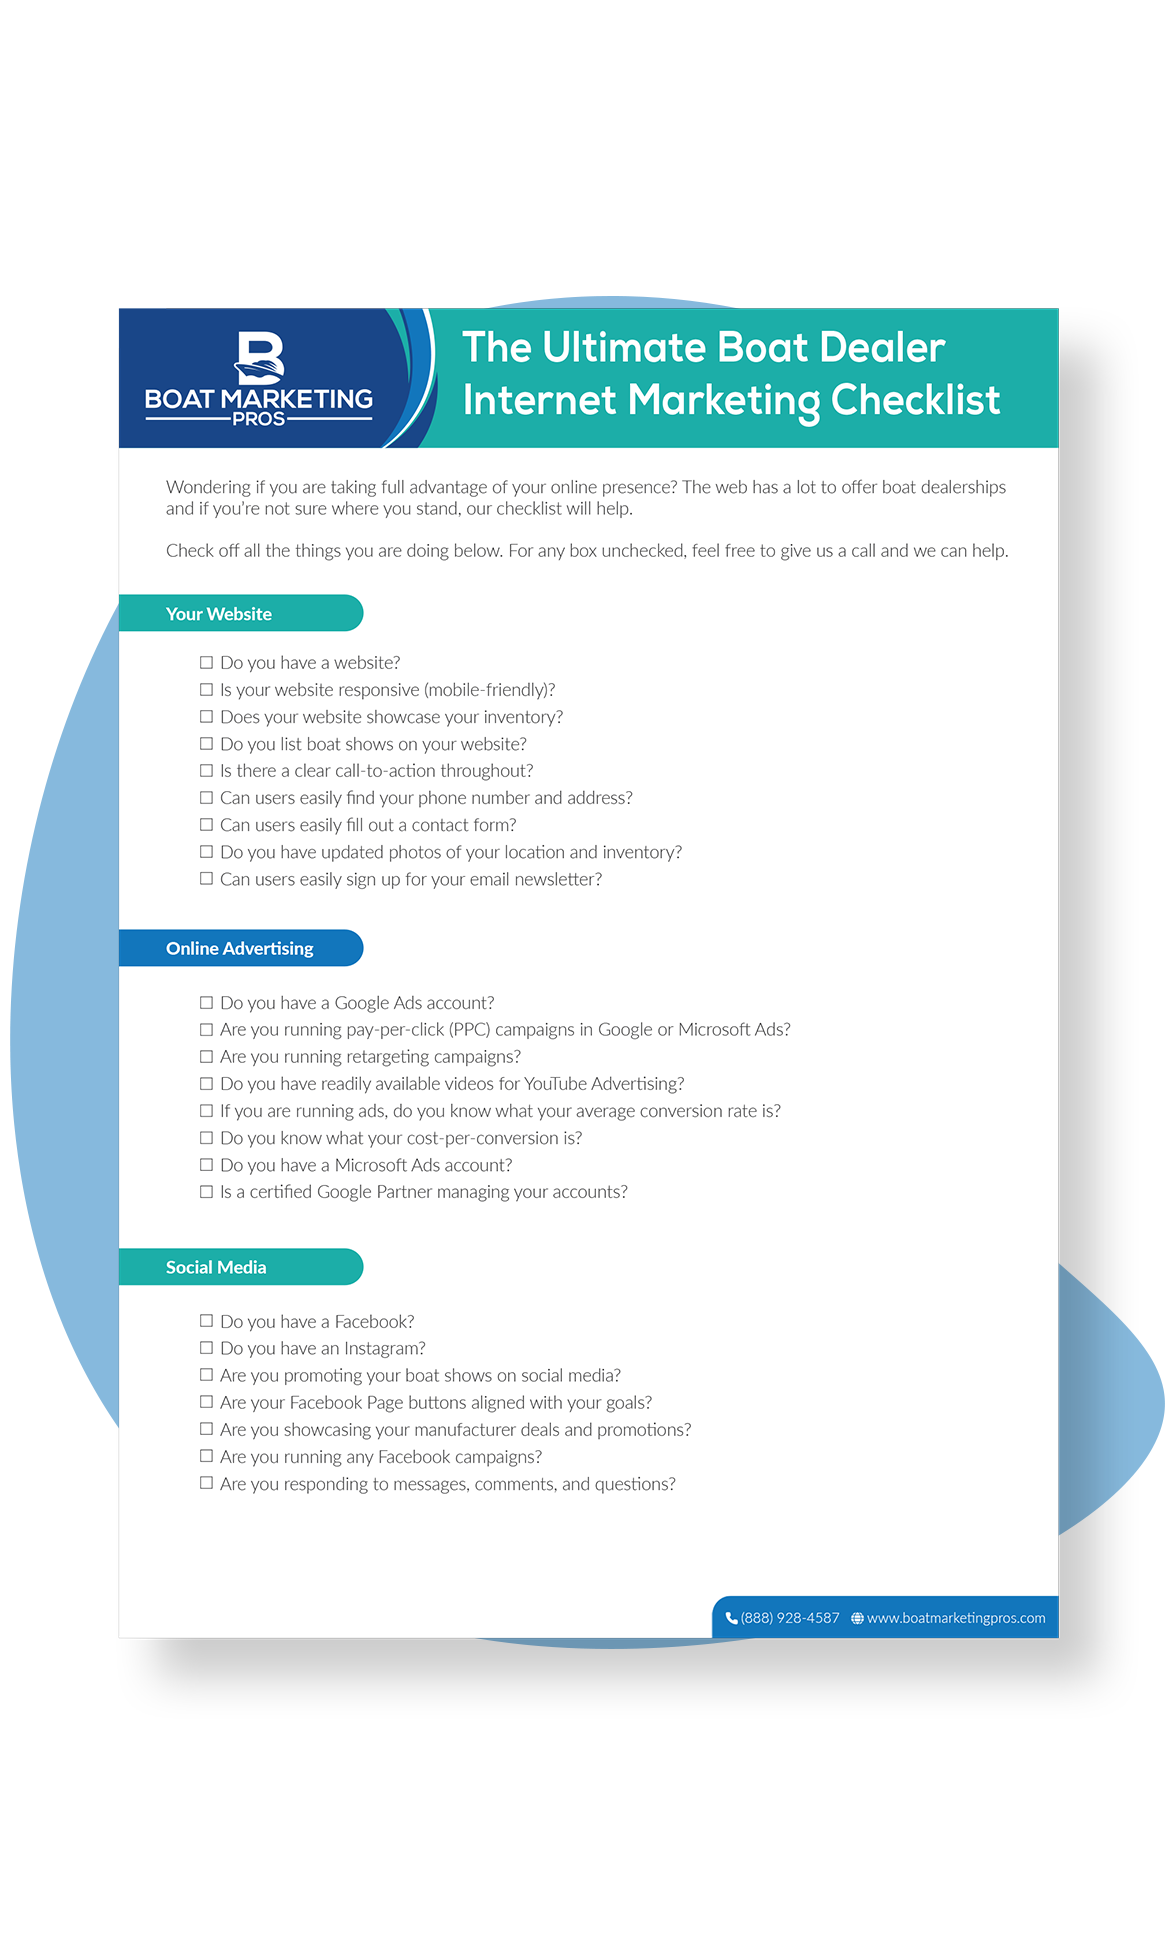 The Ultimate Internet Marketing Checklist for Boat Dealers